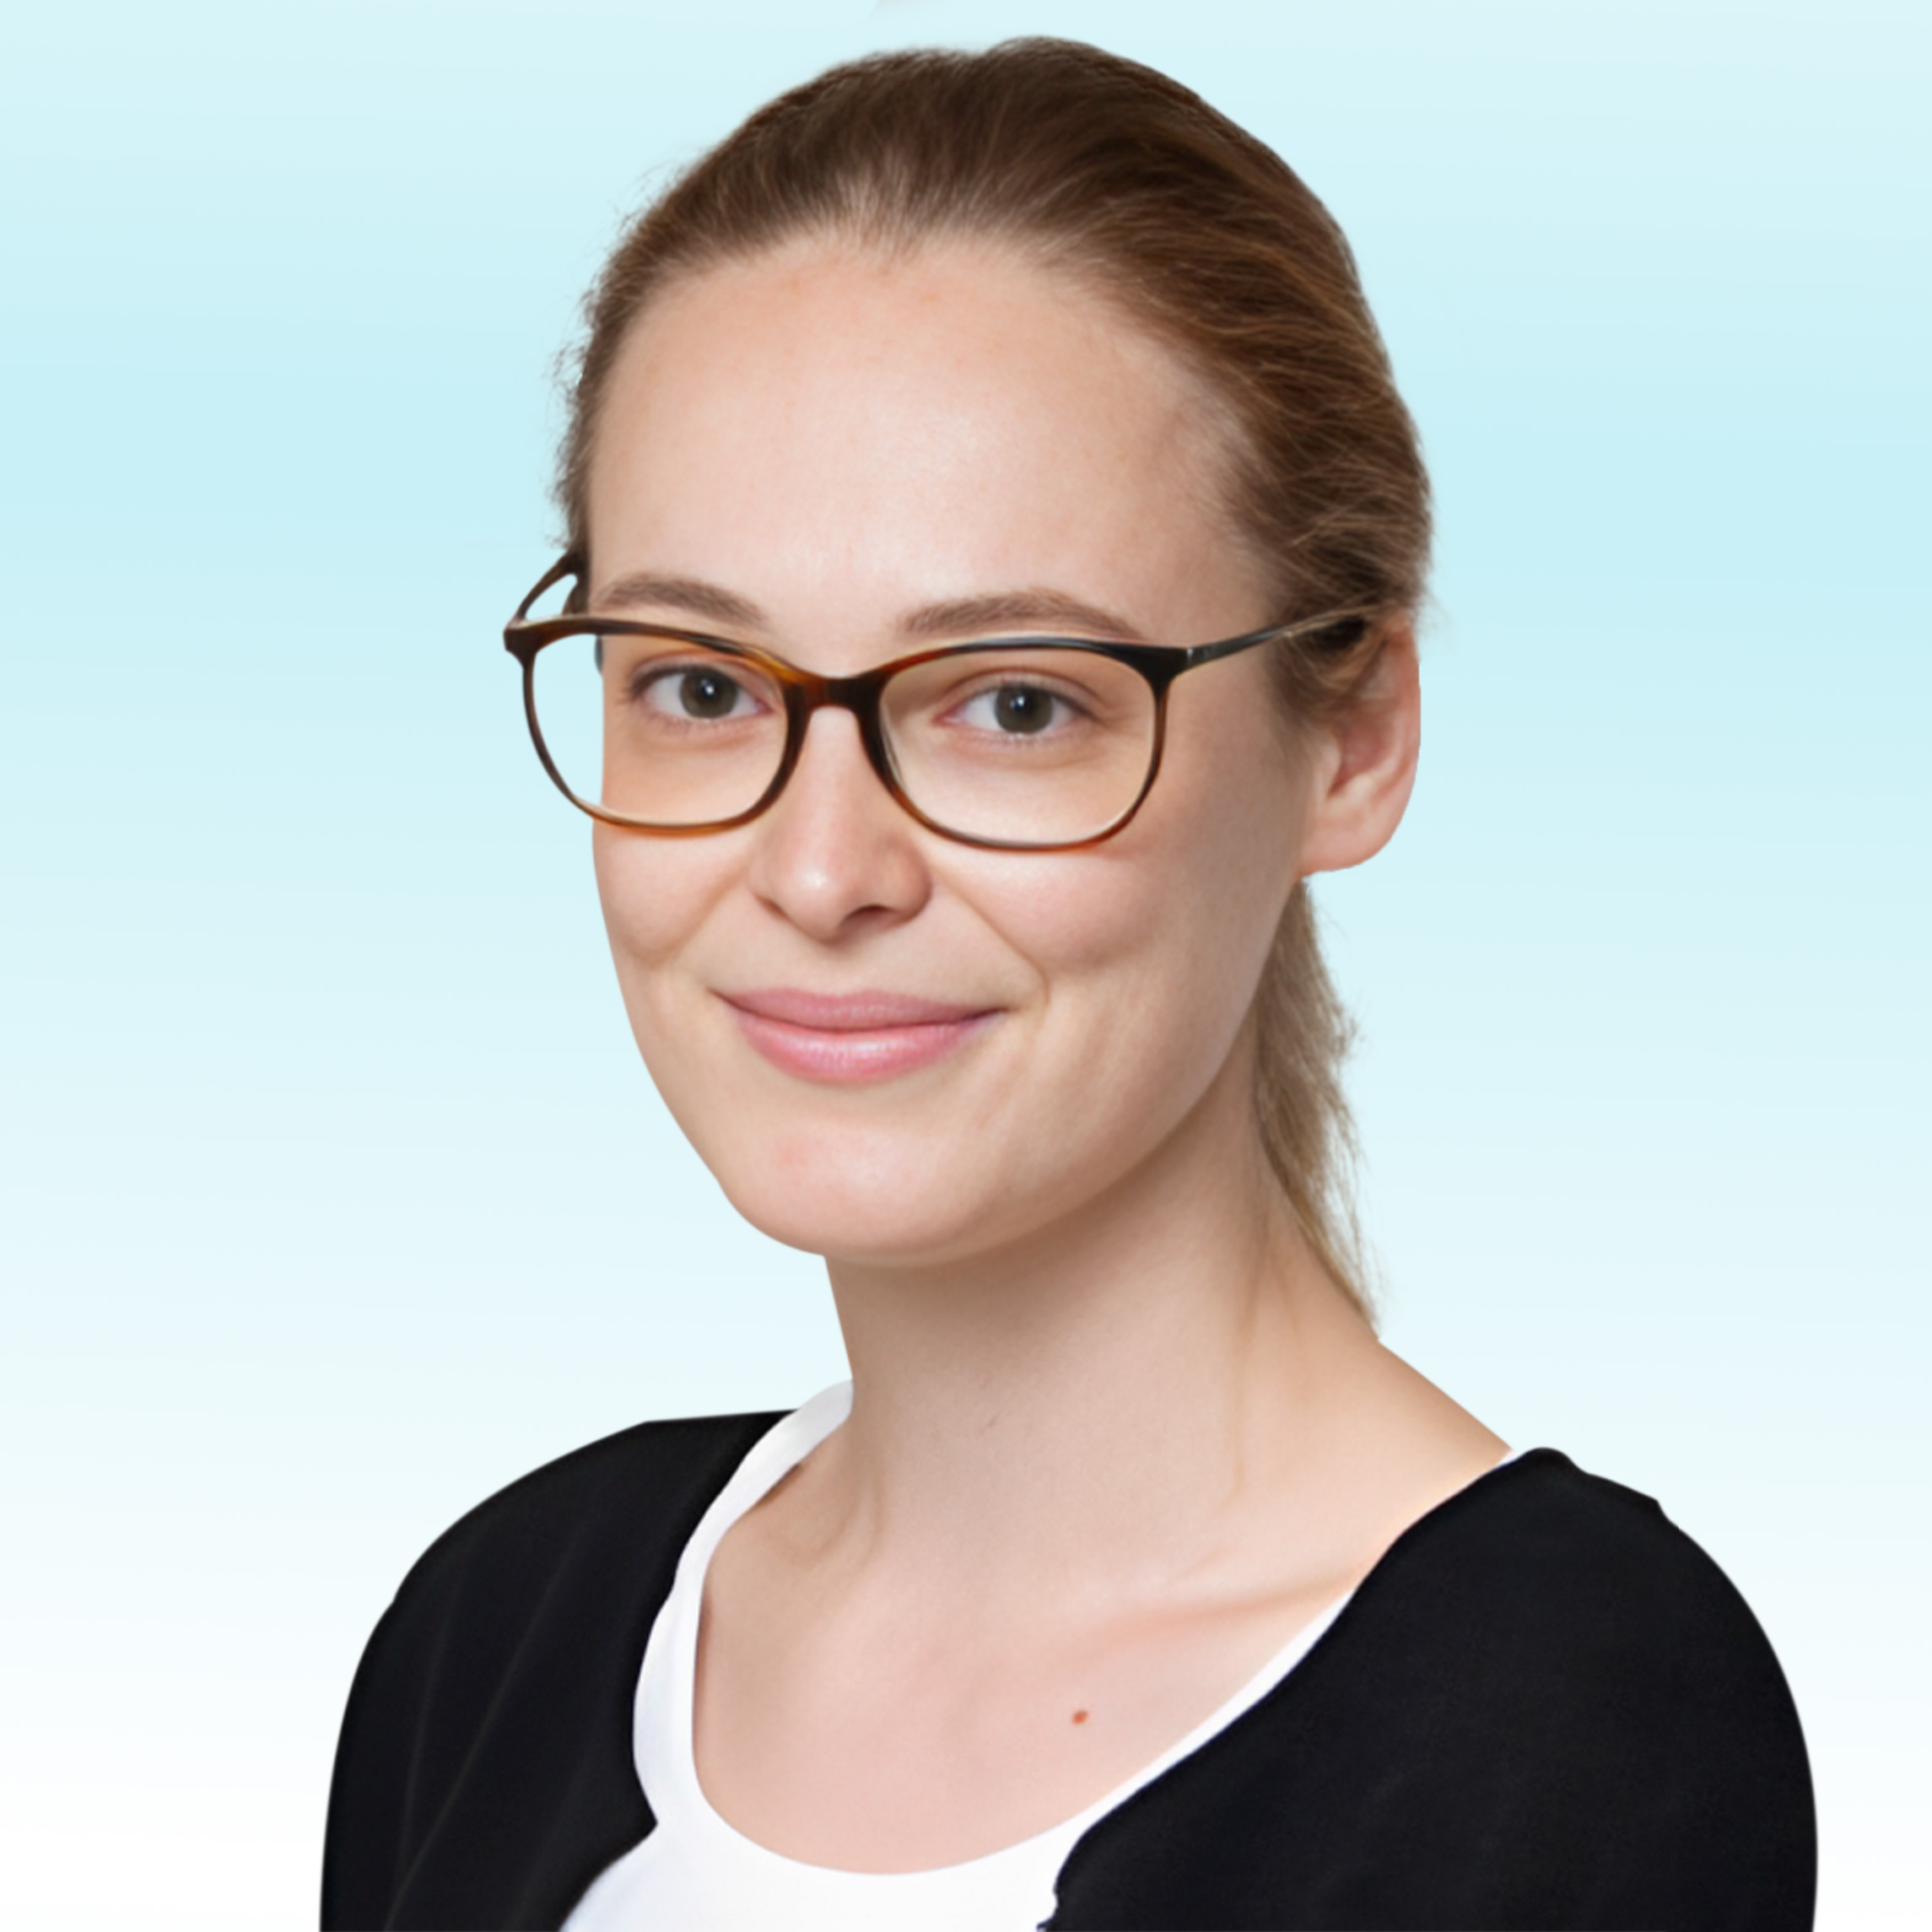 Dermatologist, Dr. med. Meike Kaulfuss